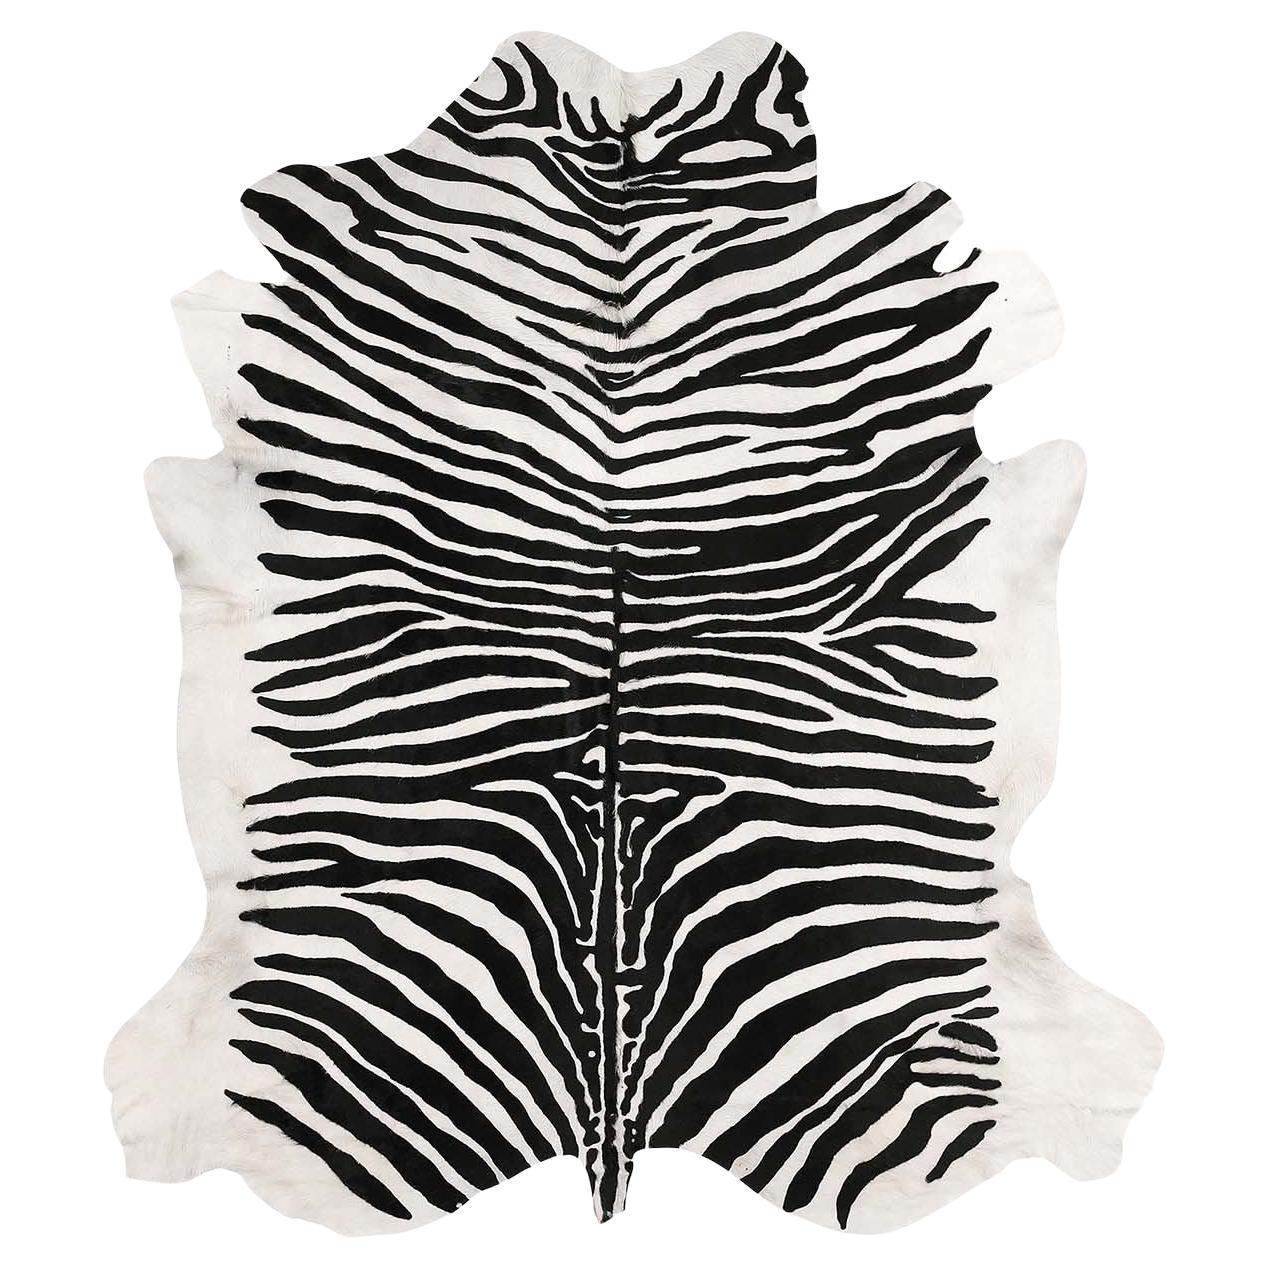 Zebra-Striped Printed Leather Rug Black & White For Sale